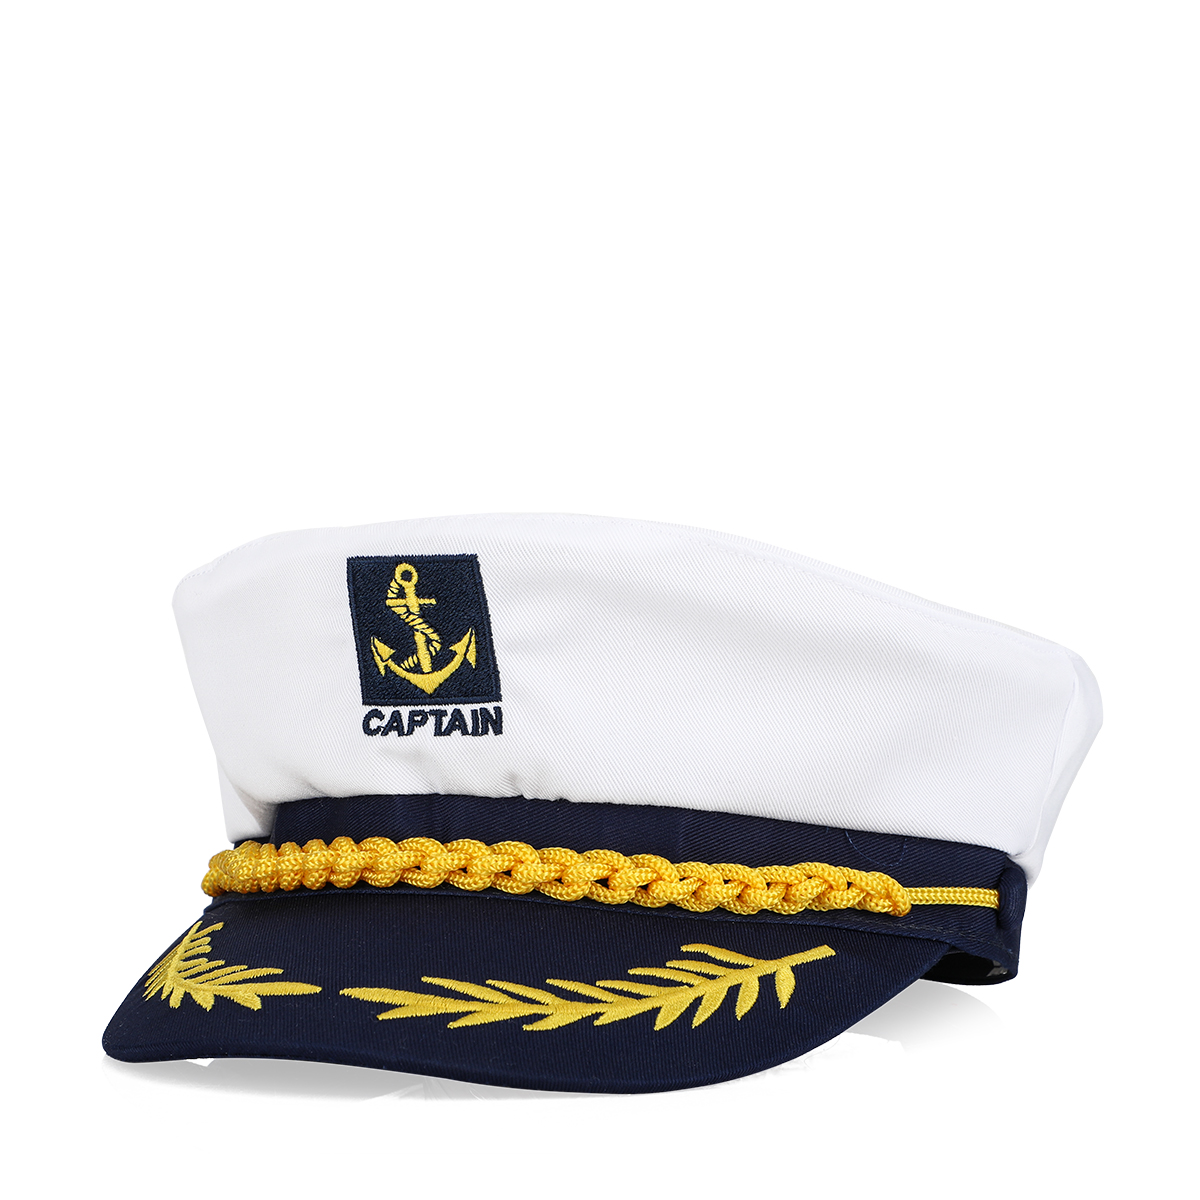 Buy Nautical Captain Sailor Hat - White Online in Bahrain